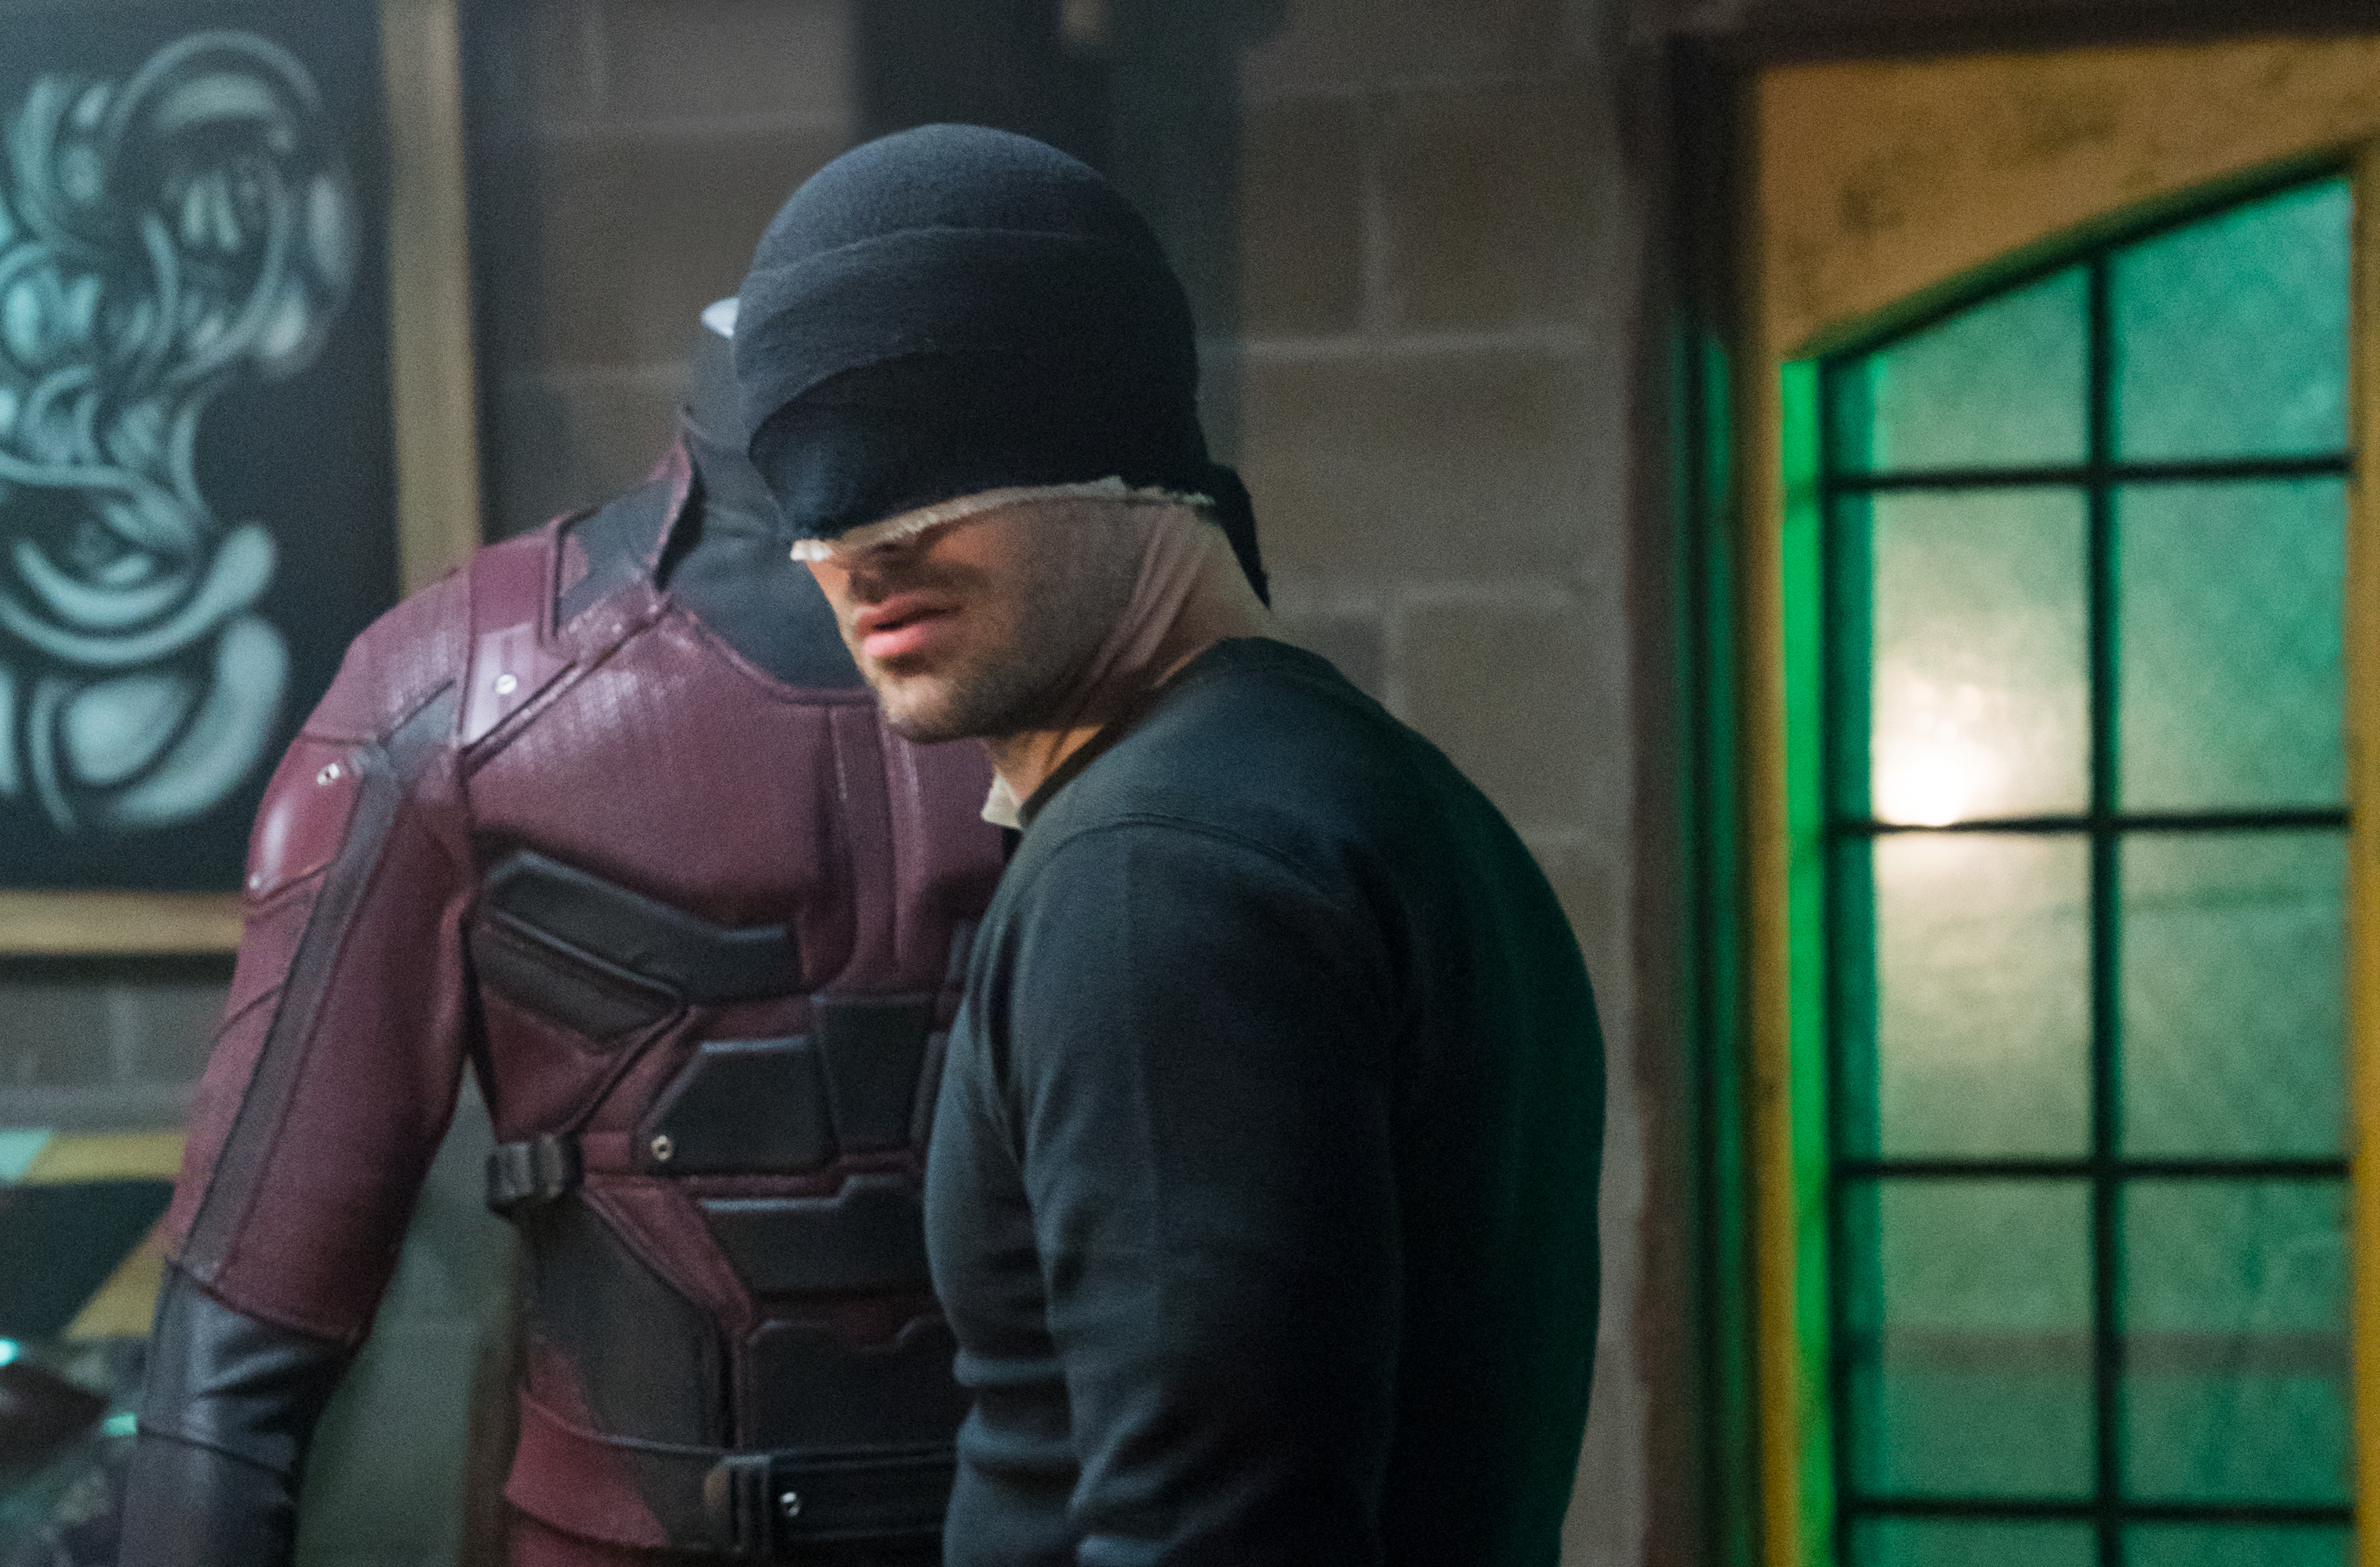 Daredevil (Charlie Cox) in his black ninja costume looking at the red daredevil costume